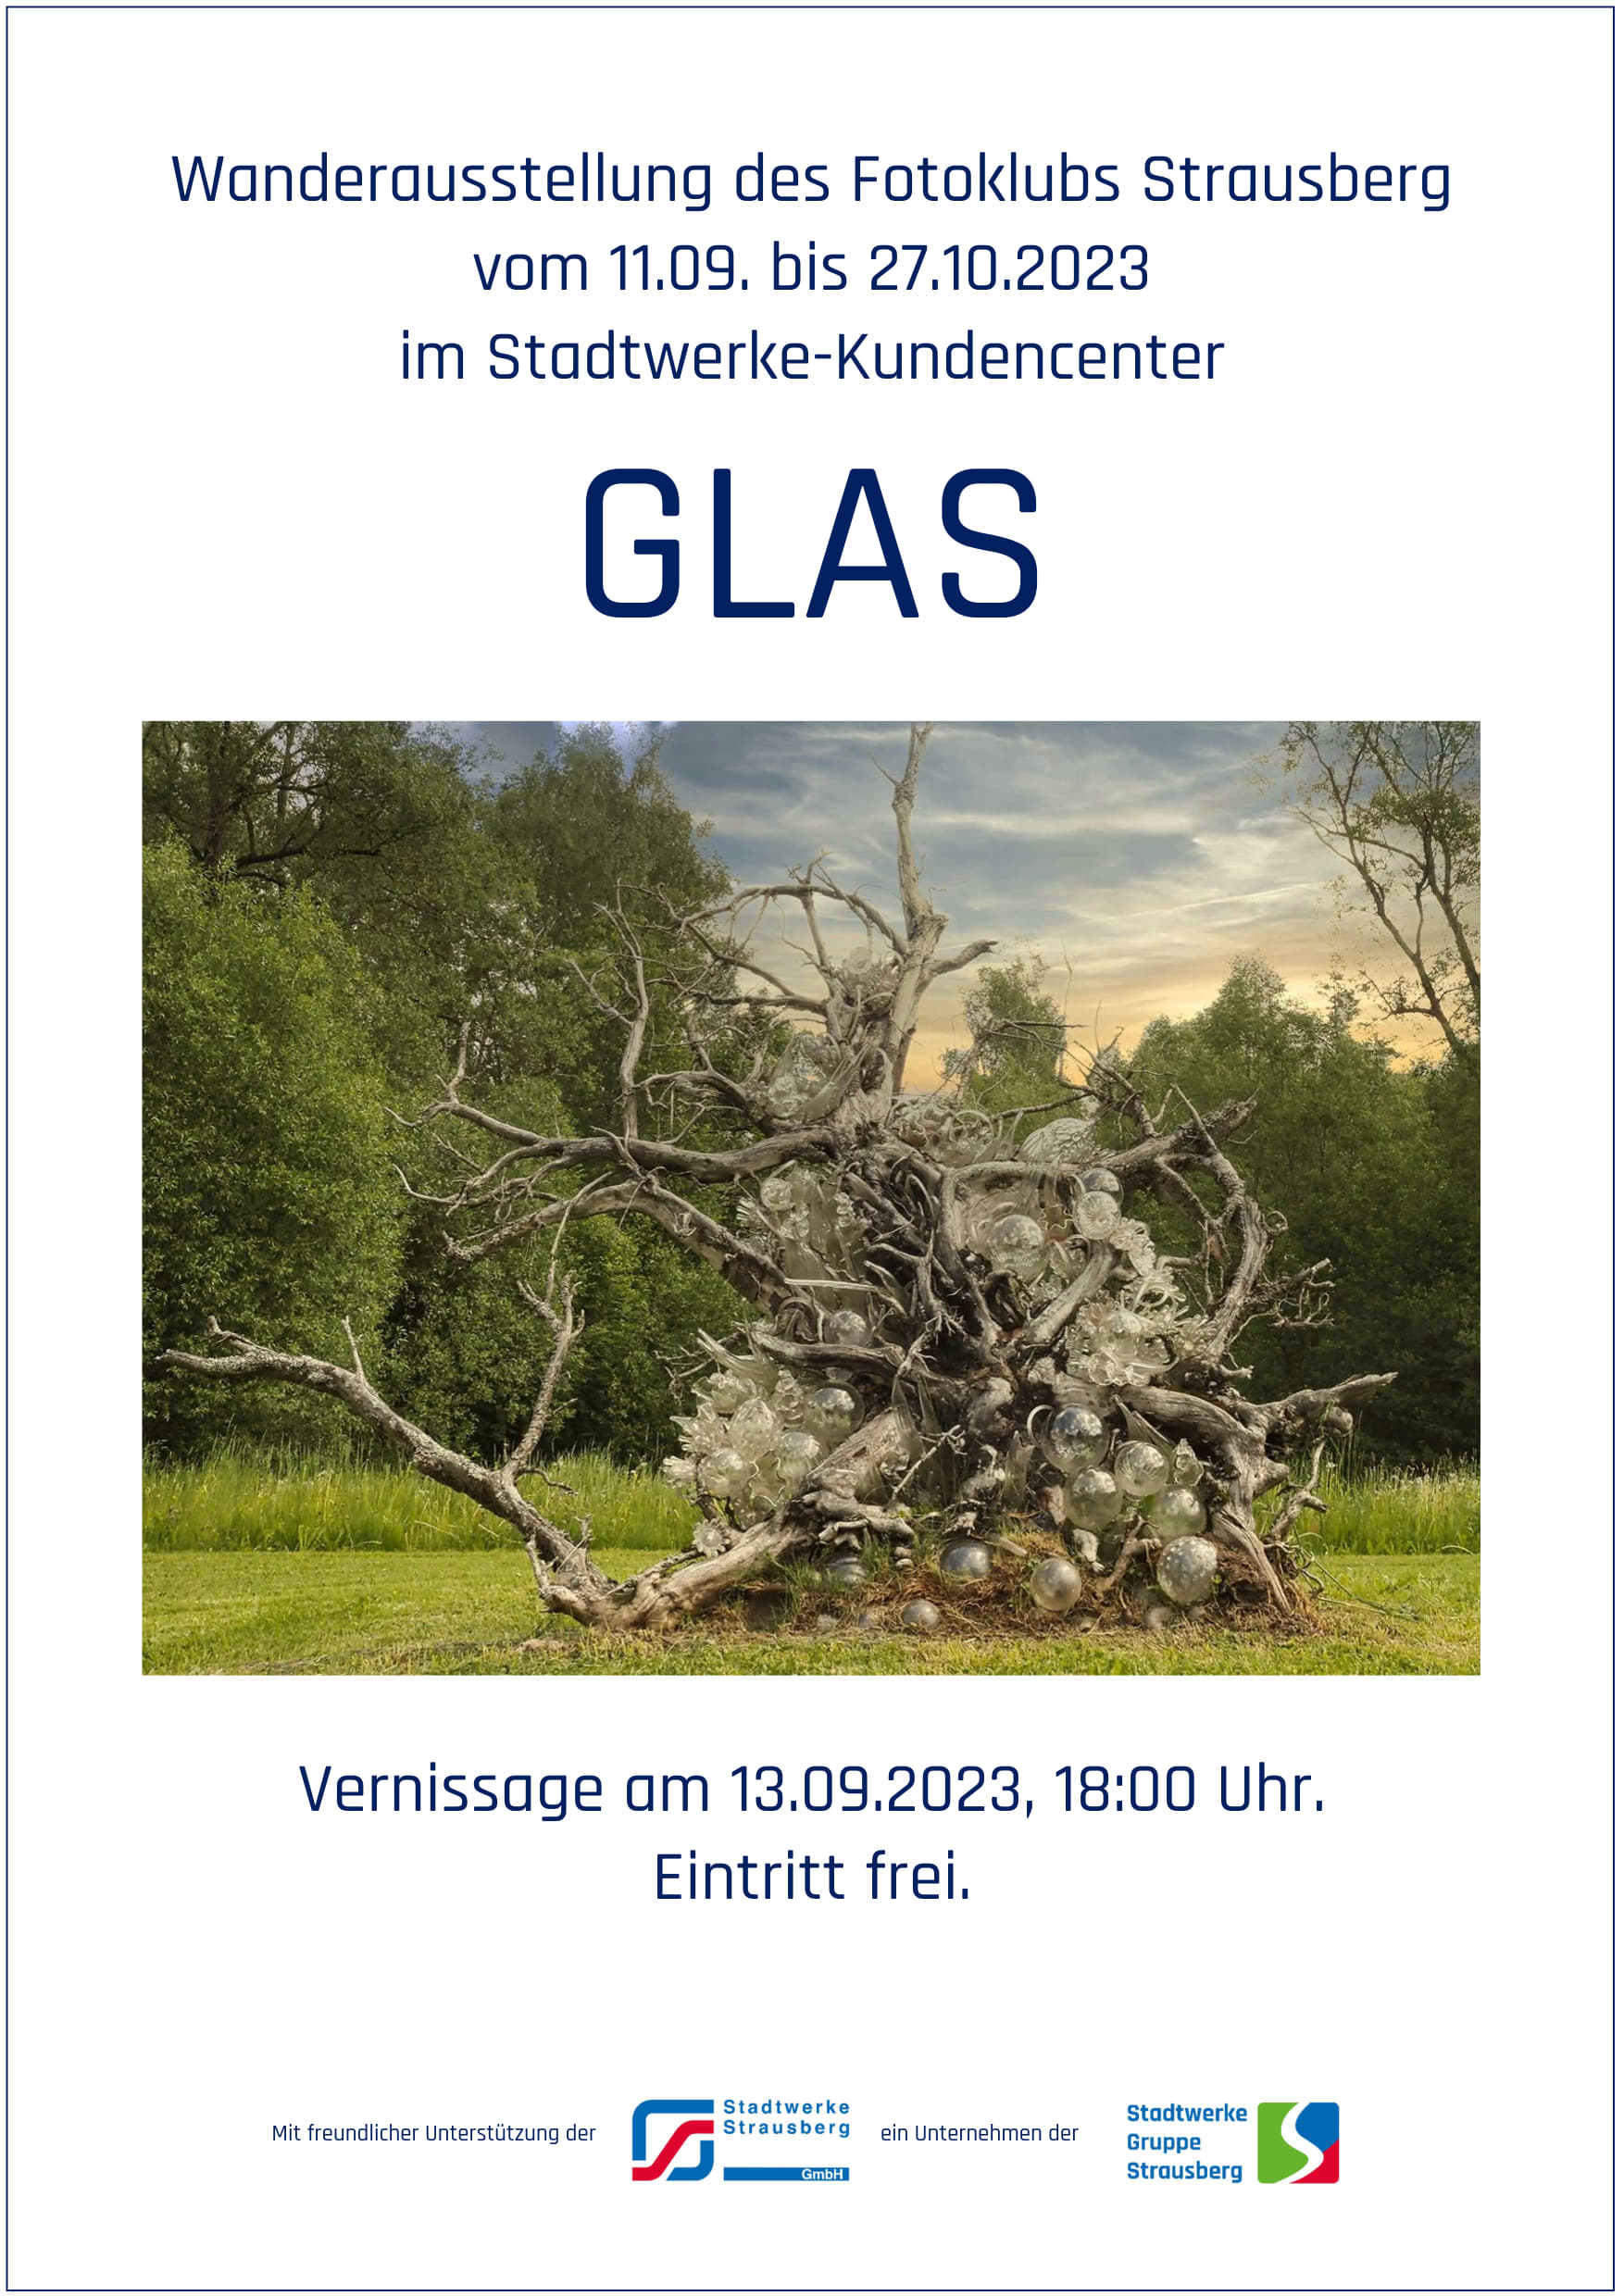 Plakat zur Wanderausstellung Glas 2023 des Fotoklubs Strausberg